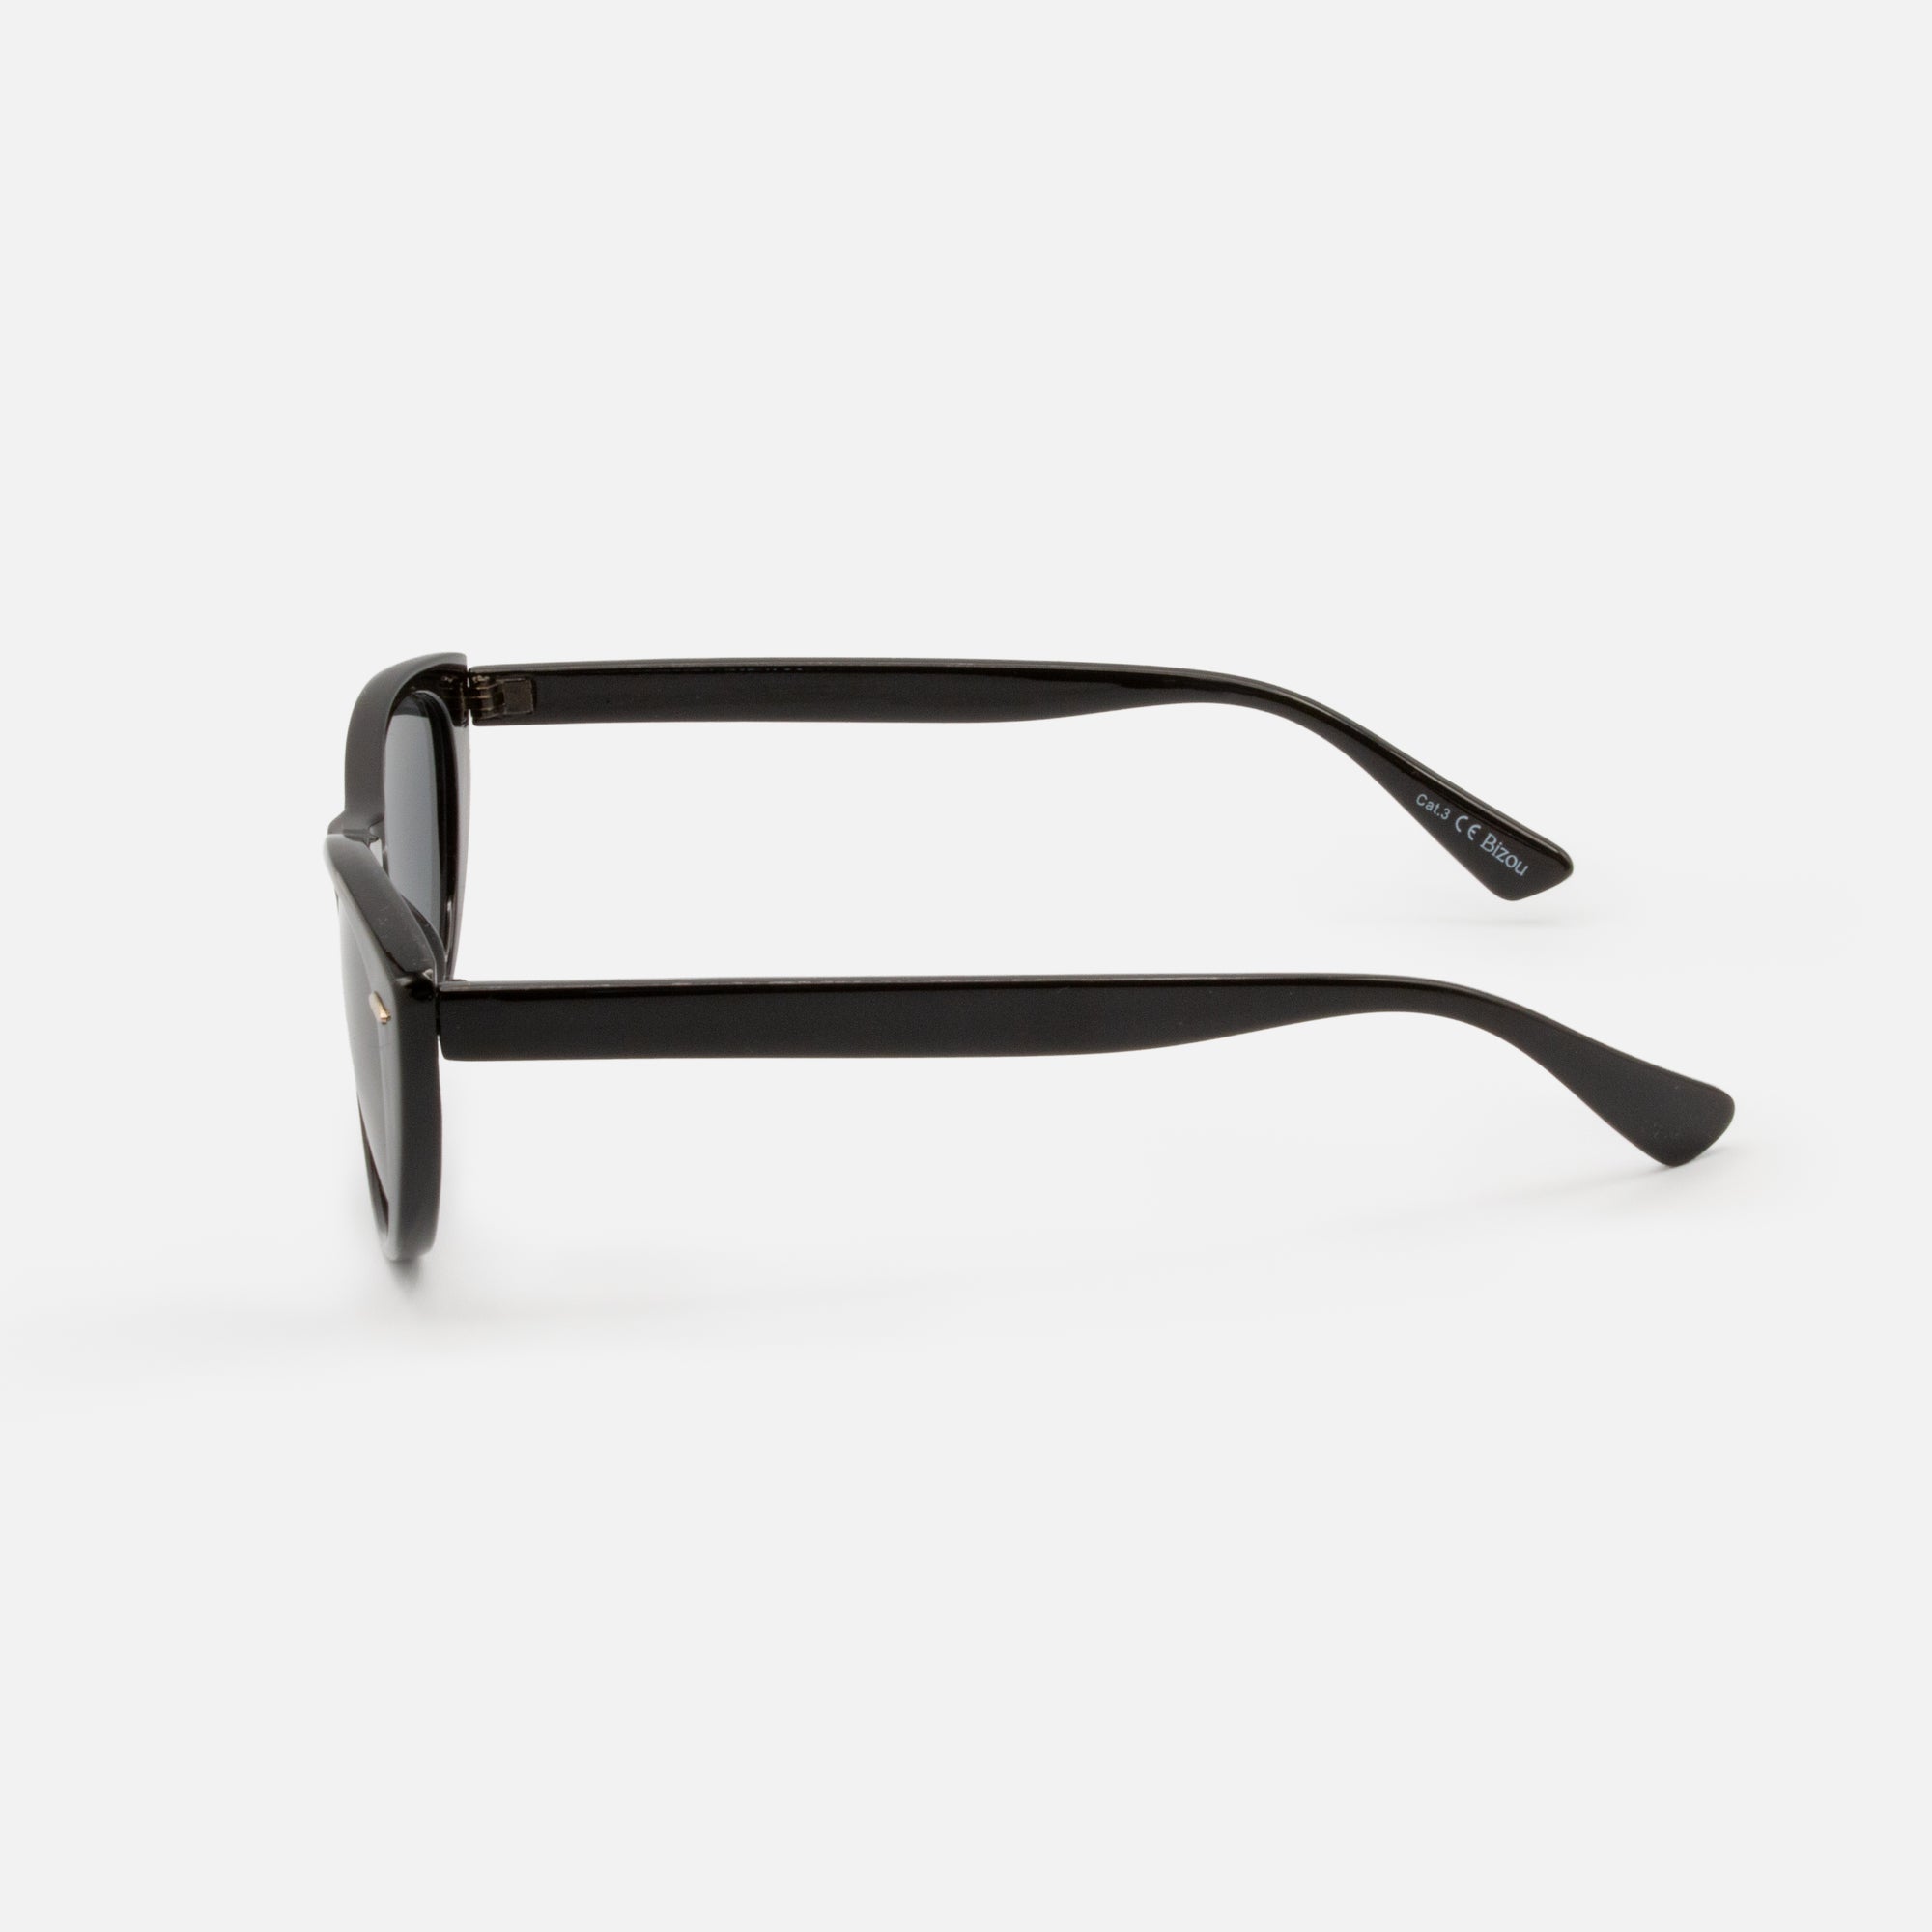 Black cat eye sunglasses with oval lenses